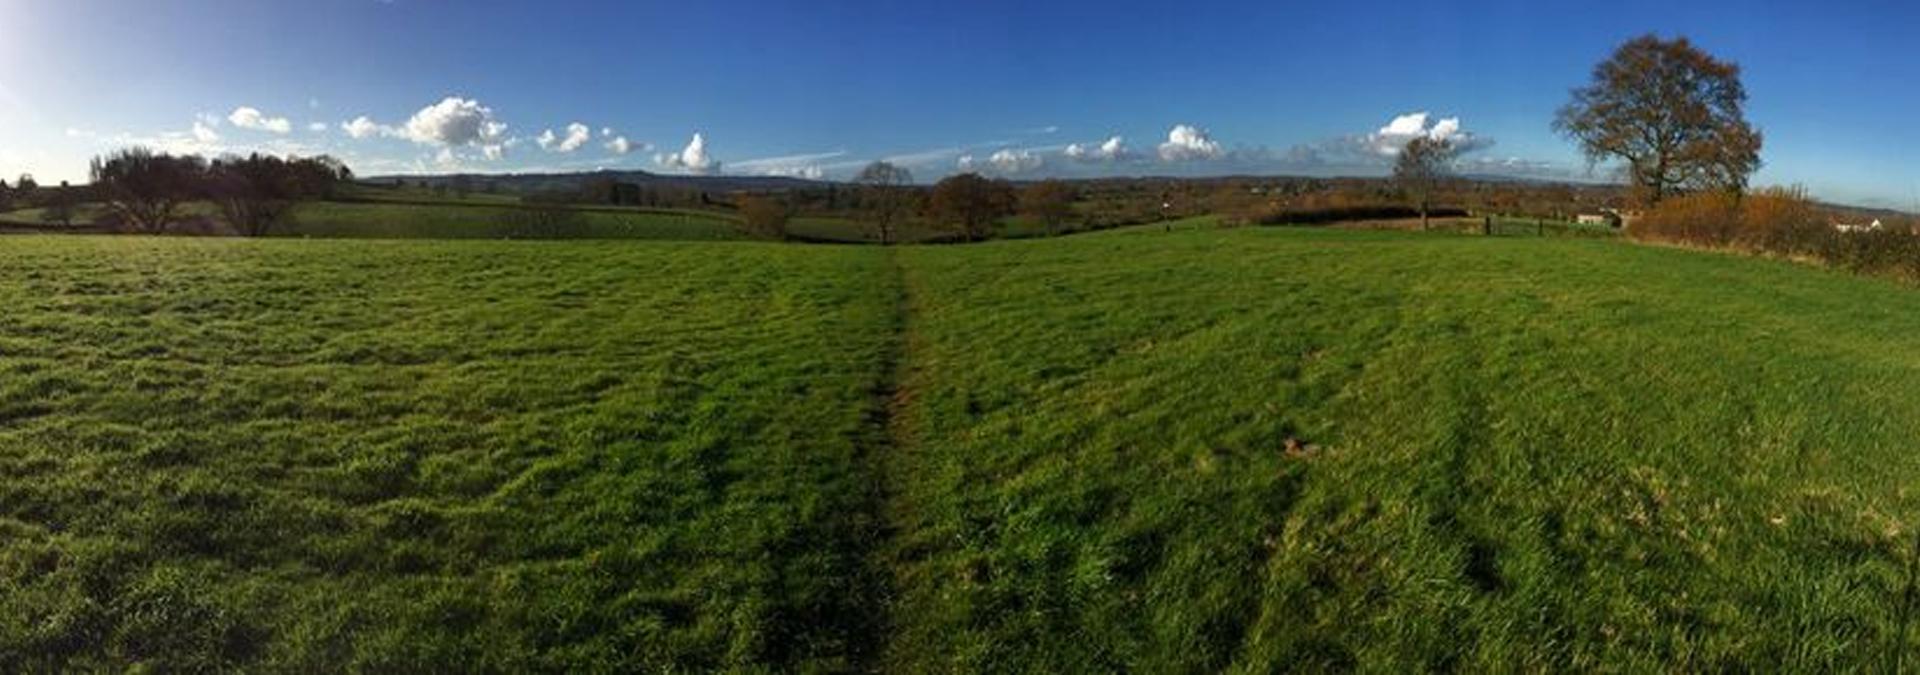 Fields near Ashill